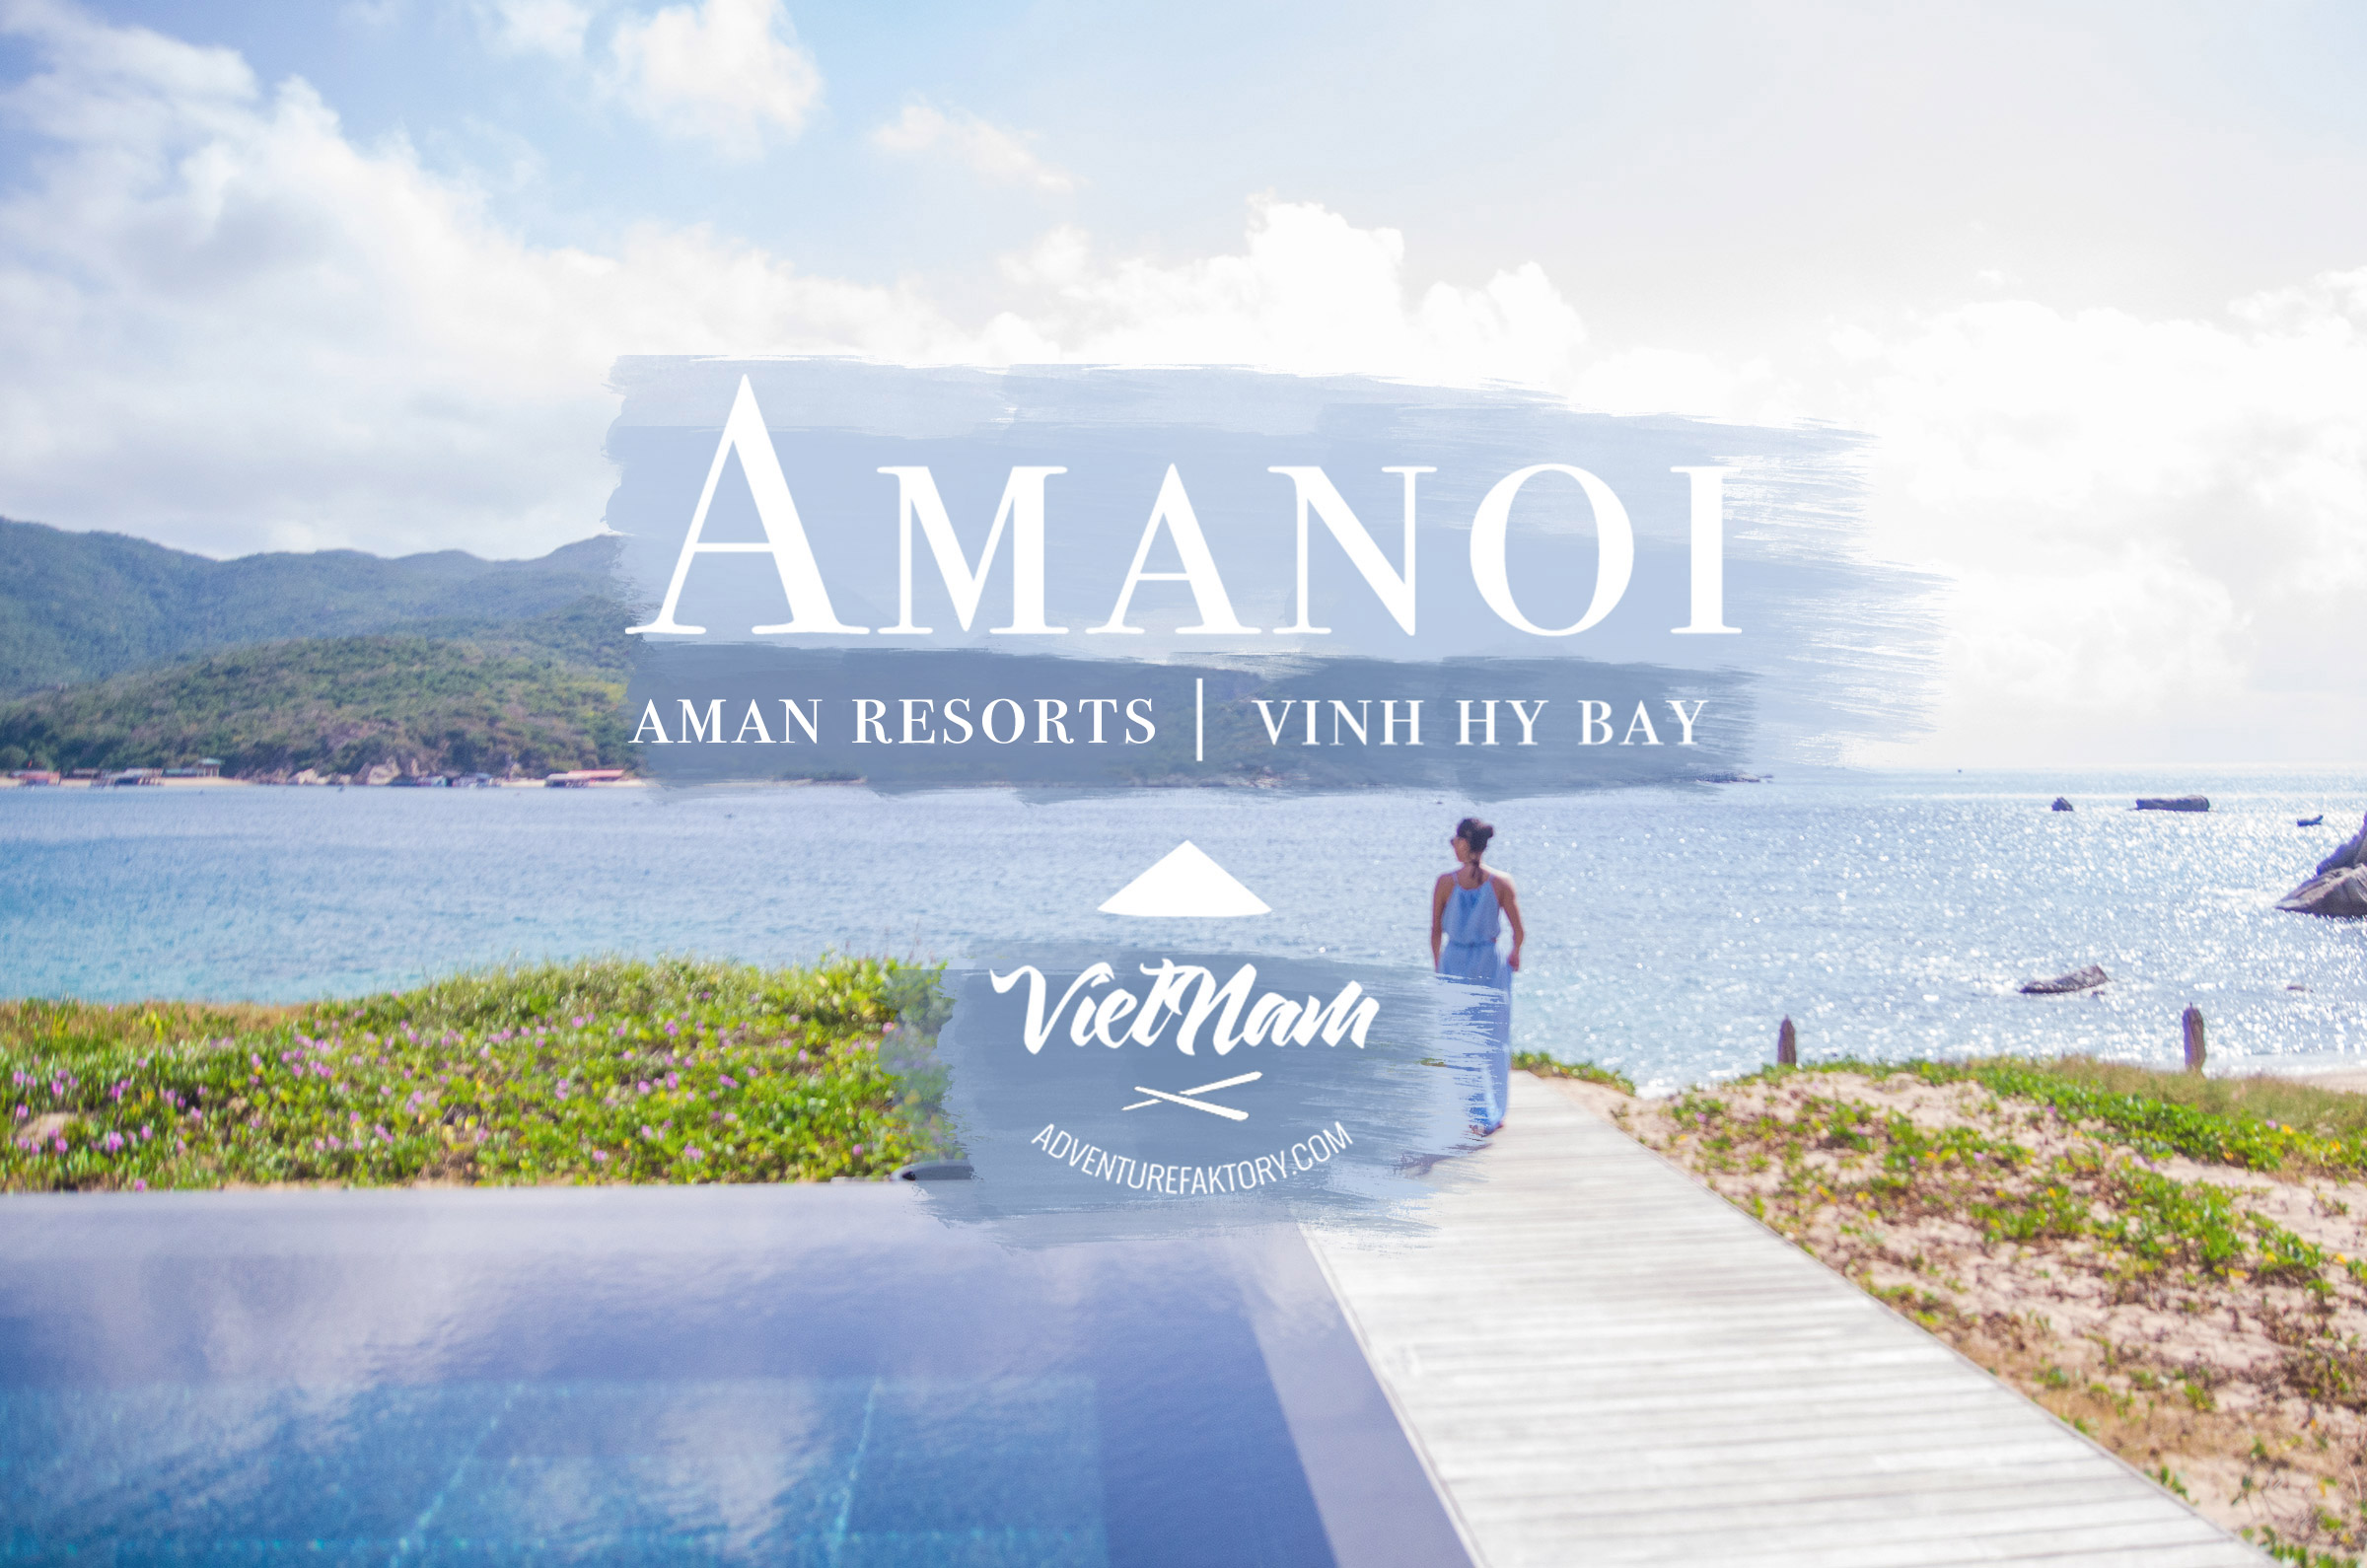 Aman Resorts - Amanoi Vietnam